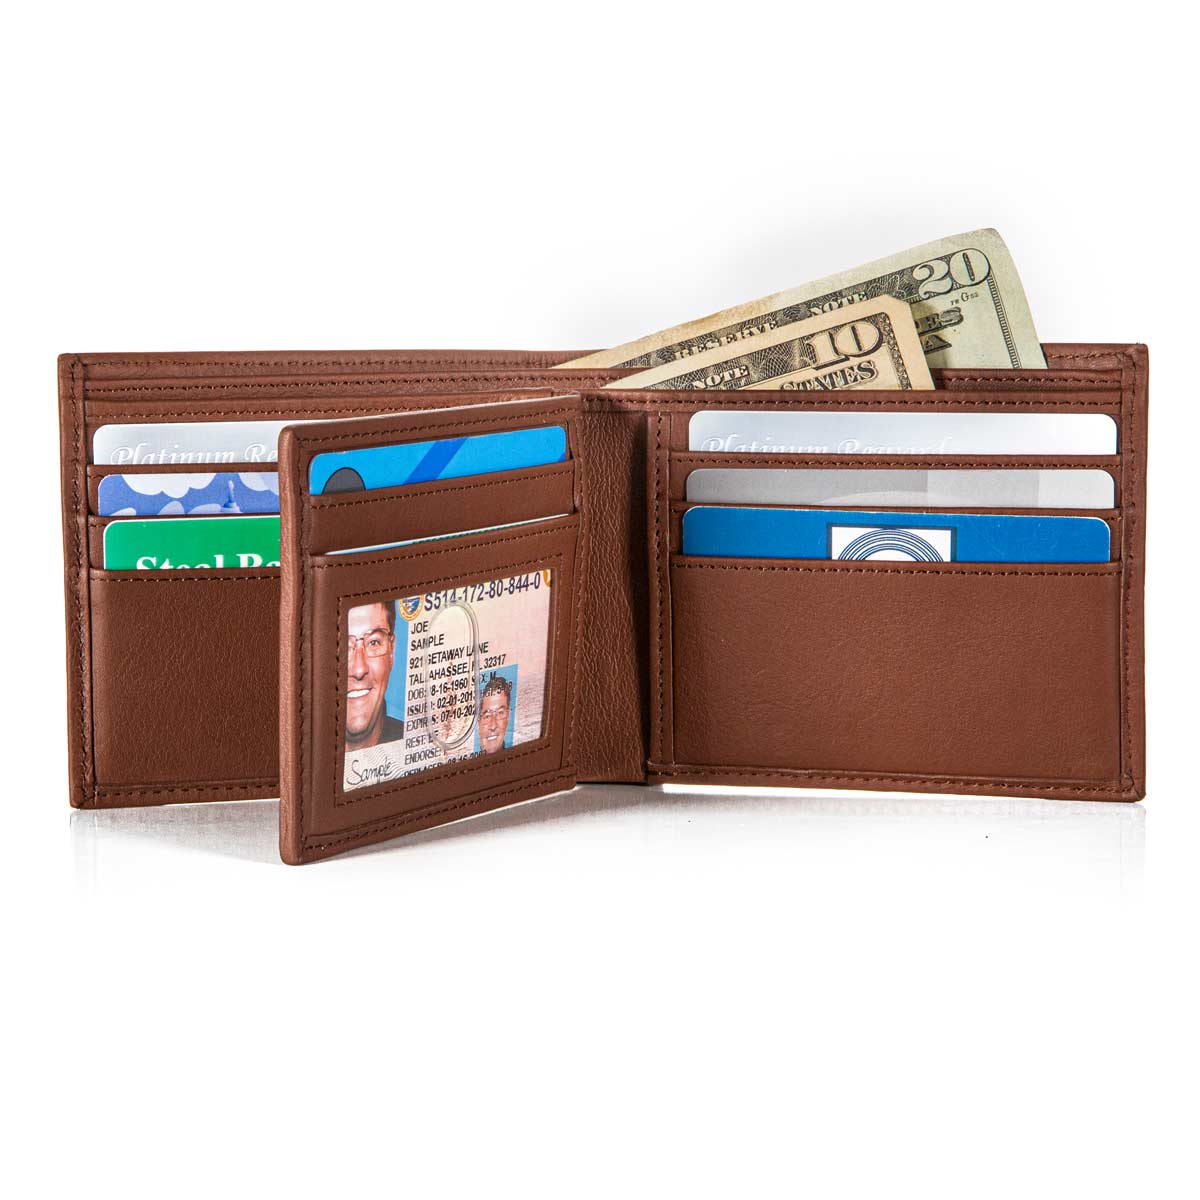 Mens RFID Wallet -  10 Slot Bifold Wallet with ID Window